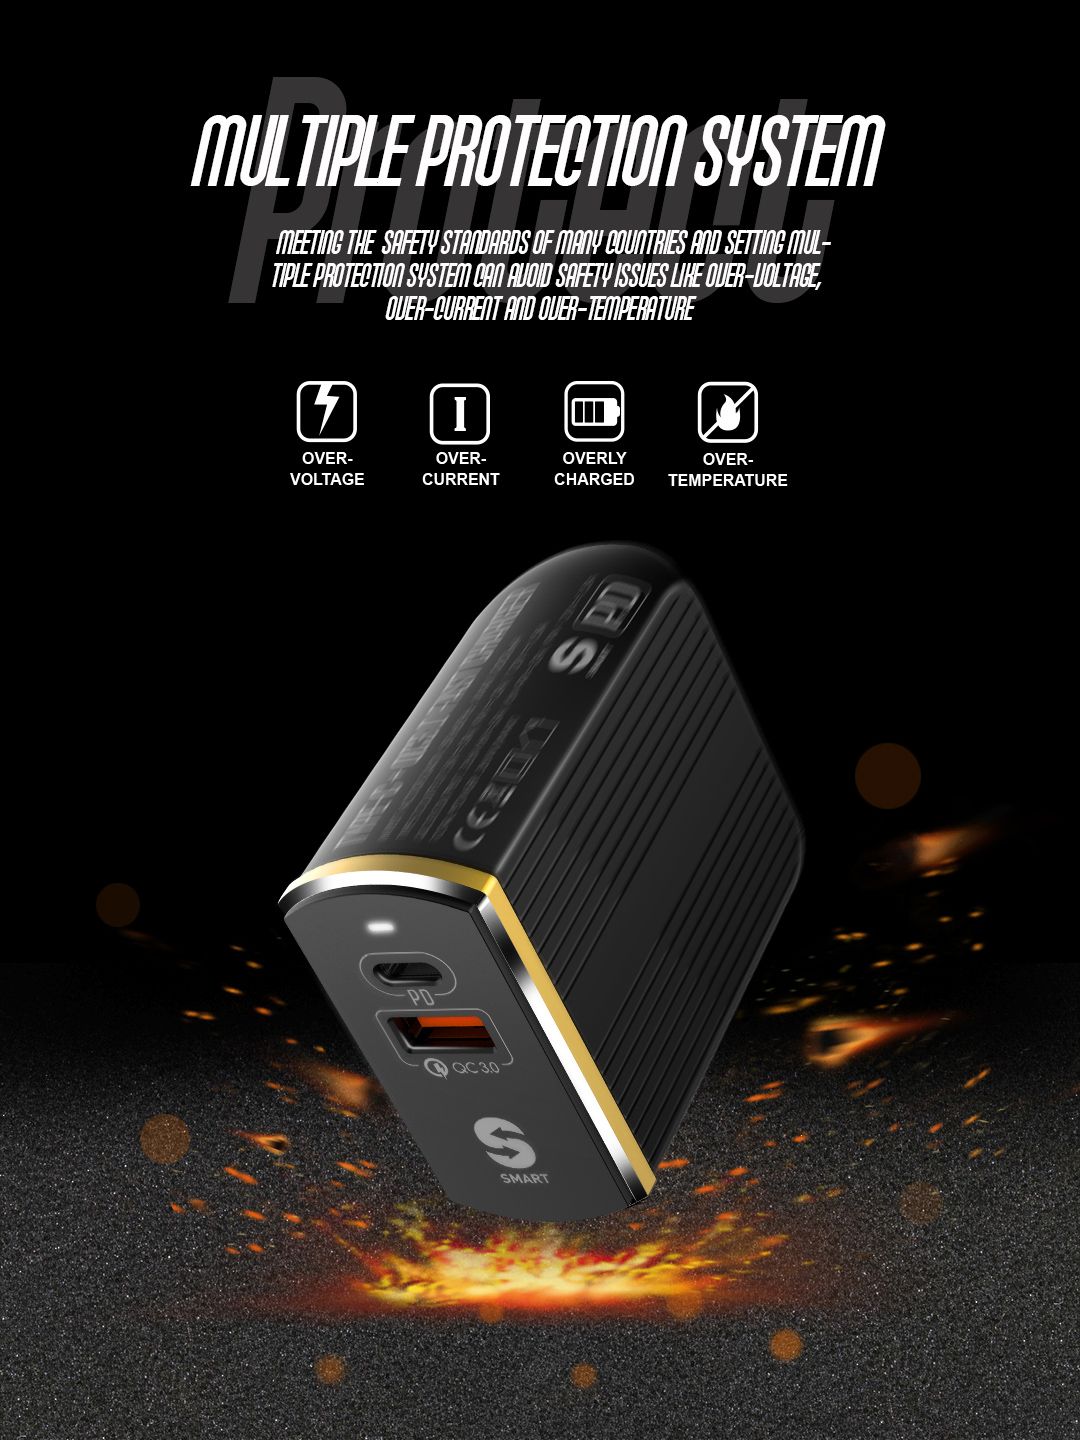 LDNIO-A2502C-EU-Plug-QC30-USBType-C-PD-Travel-USB-Charger-for-Samsung-Xiaomi-Huawei-1377058